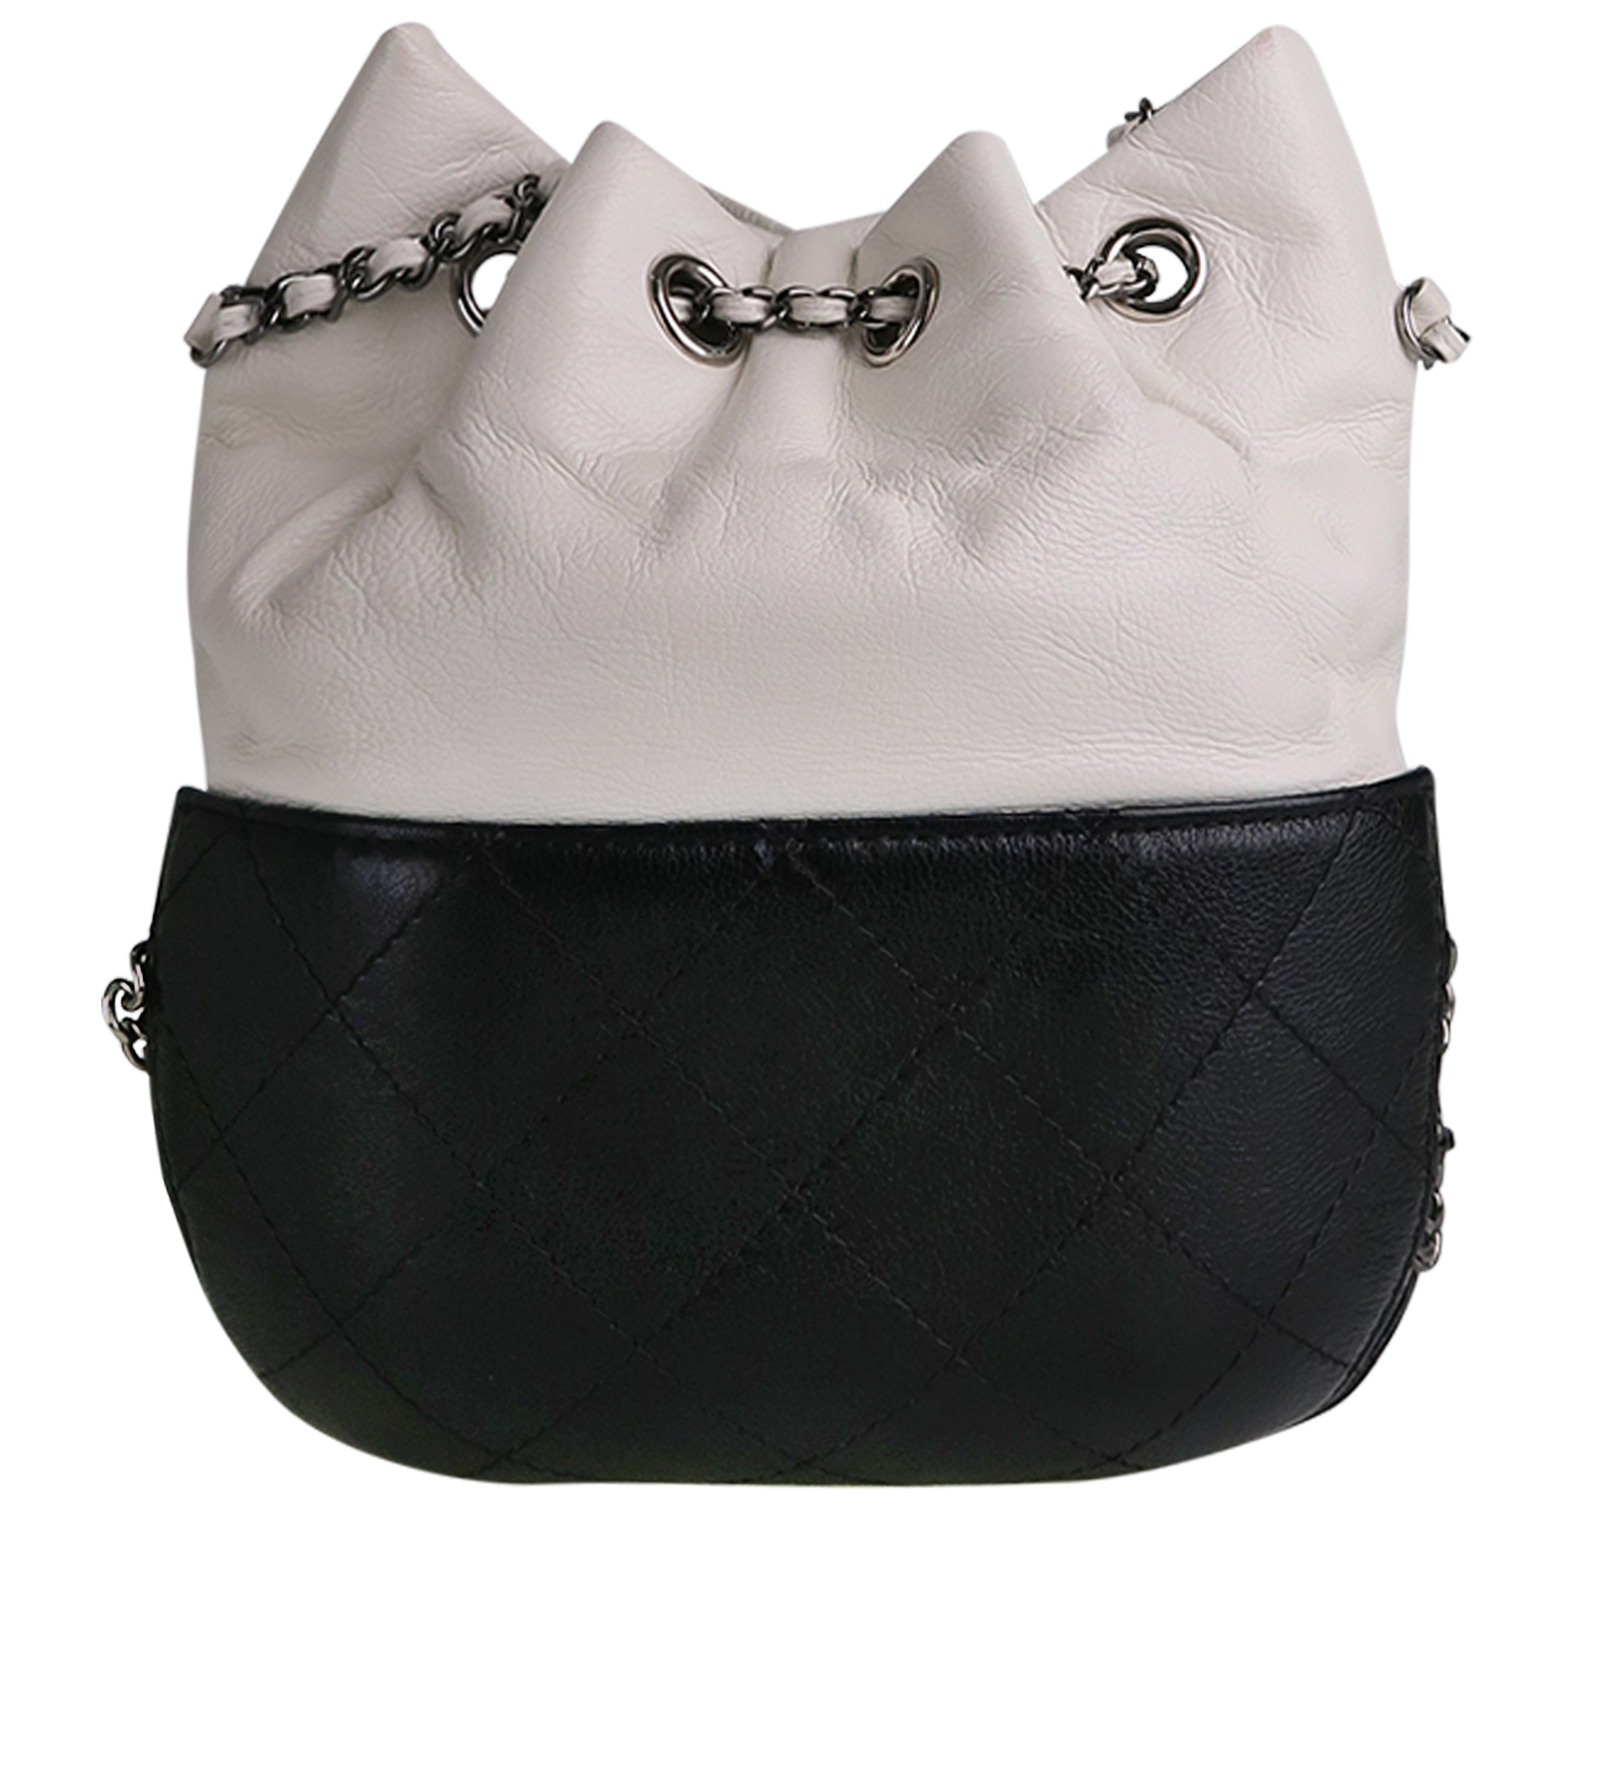 Chanel - Gabrielle Bucket Bag - Black - Small - Pre-Loved